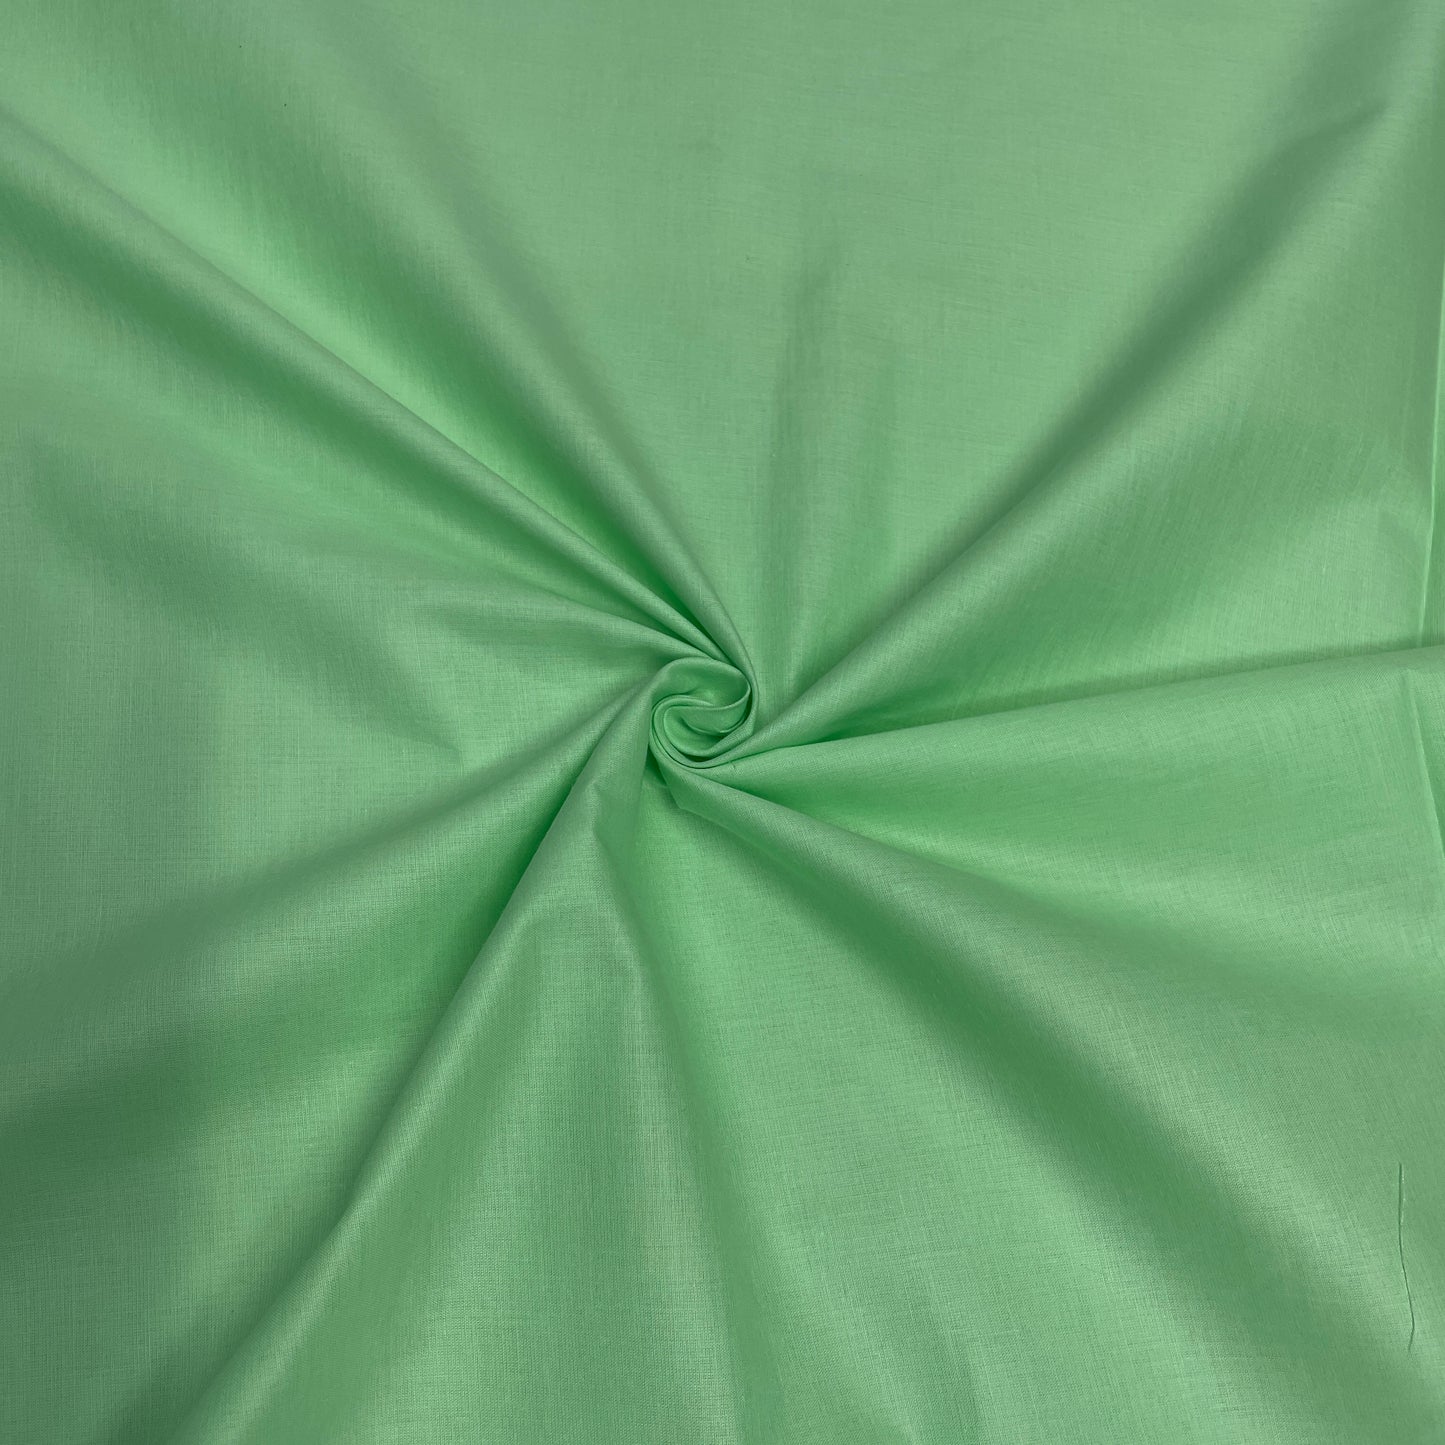 Mint Green Solid Cotton Fabric - TradeUNO